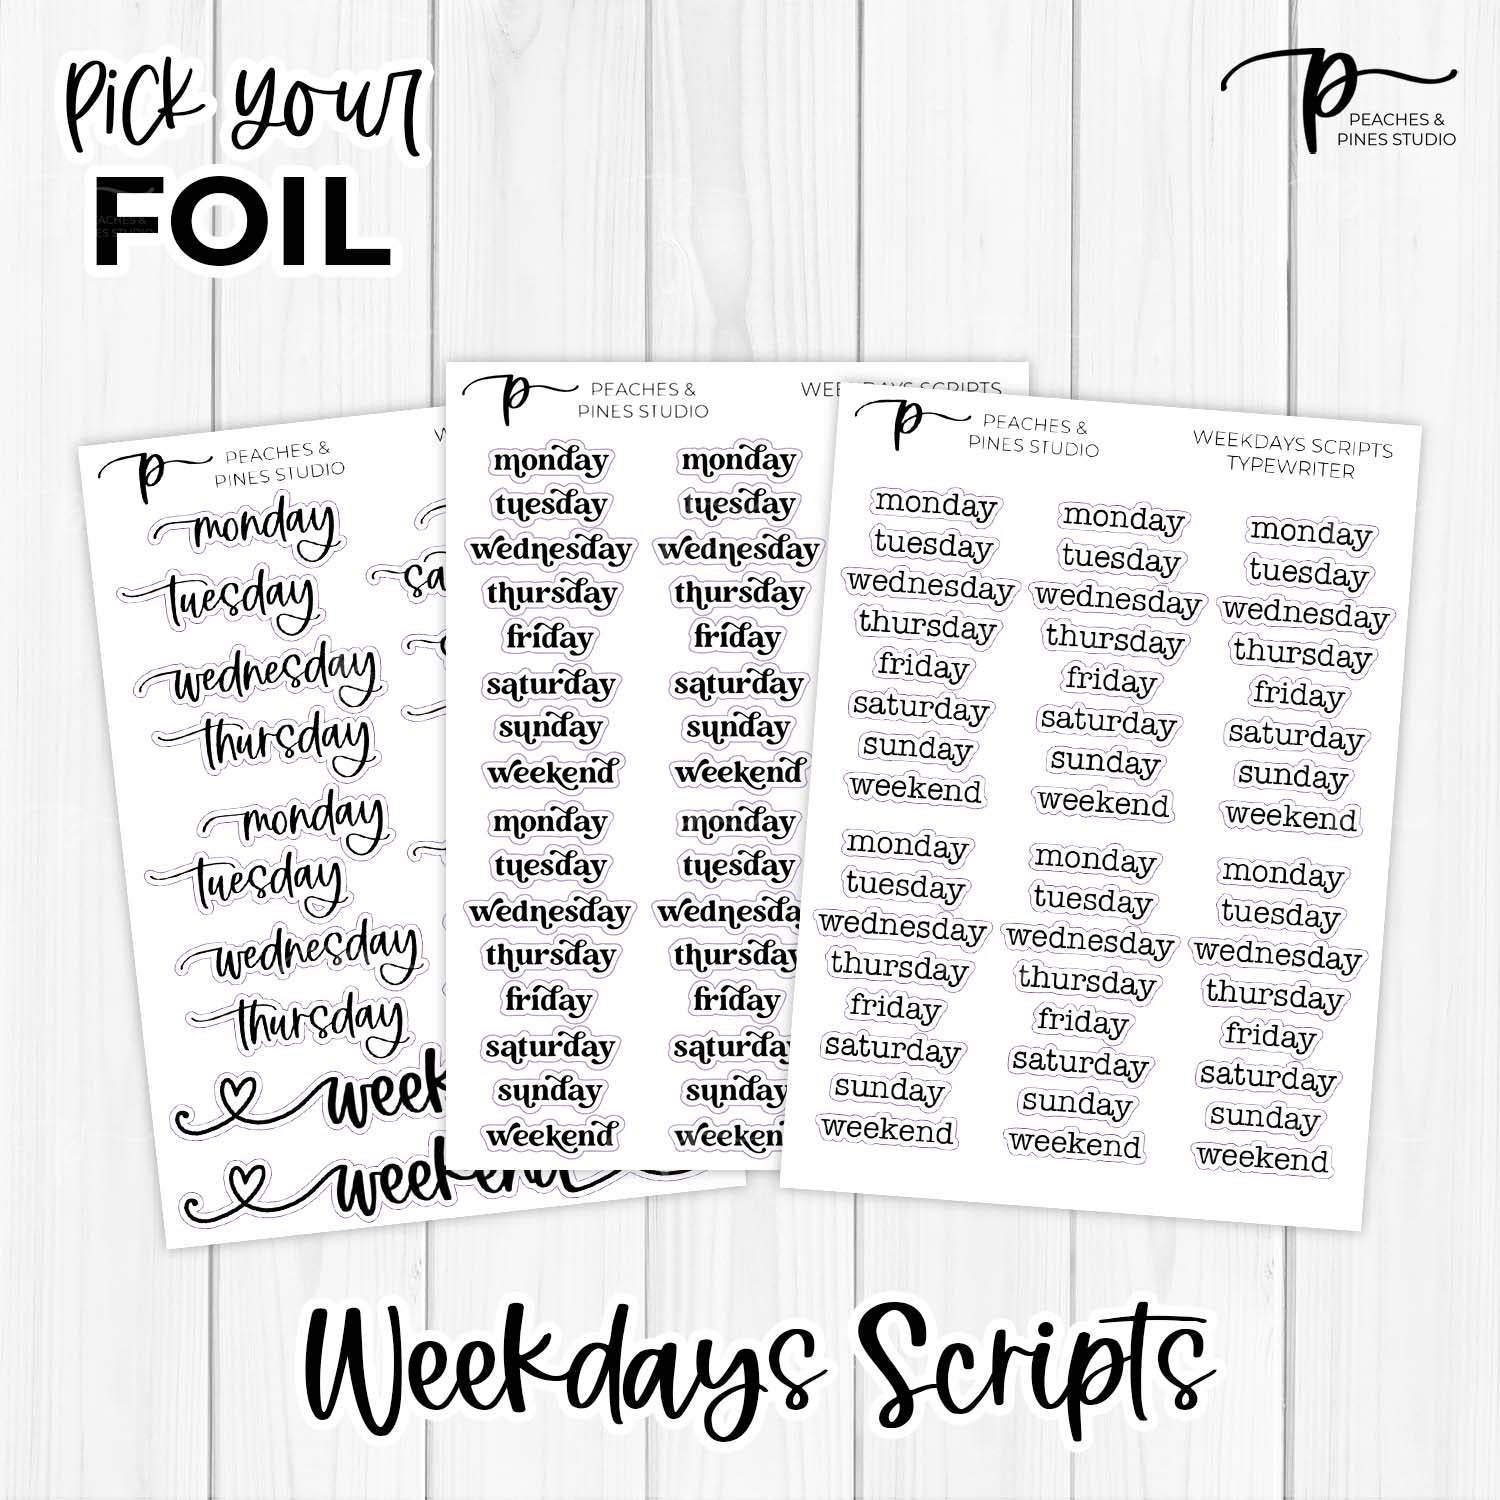 Weekdays - Foiled Scripts